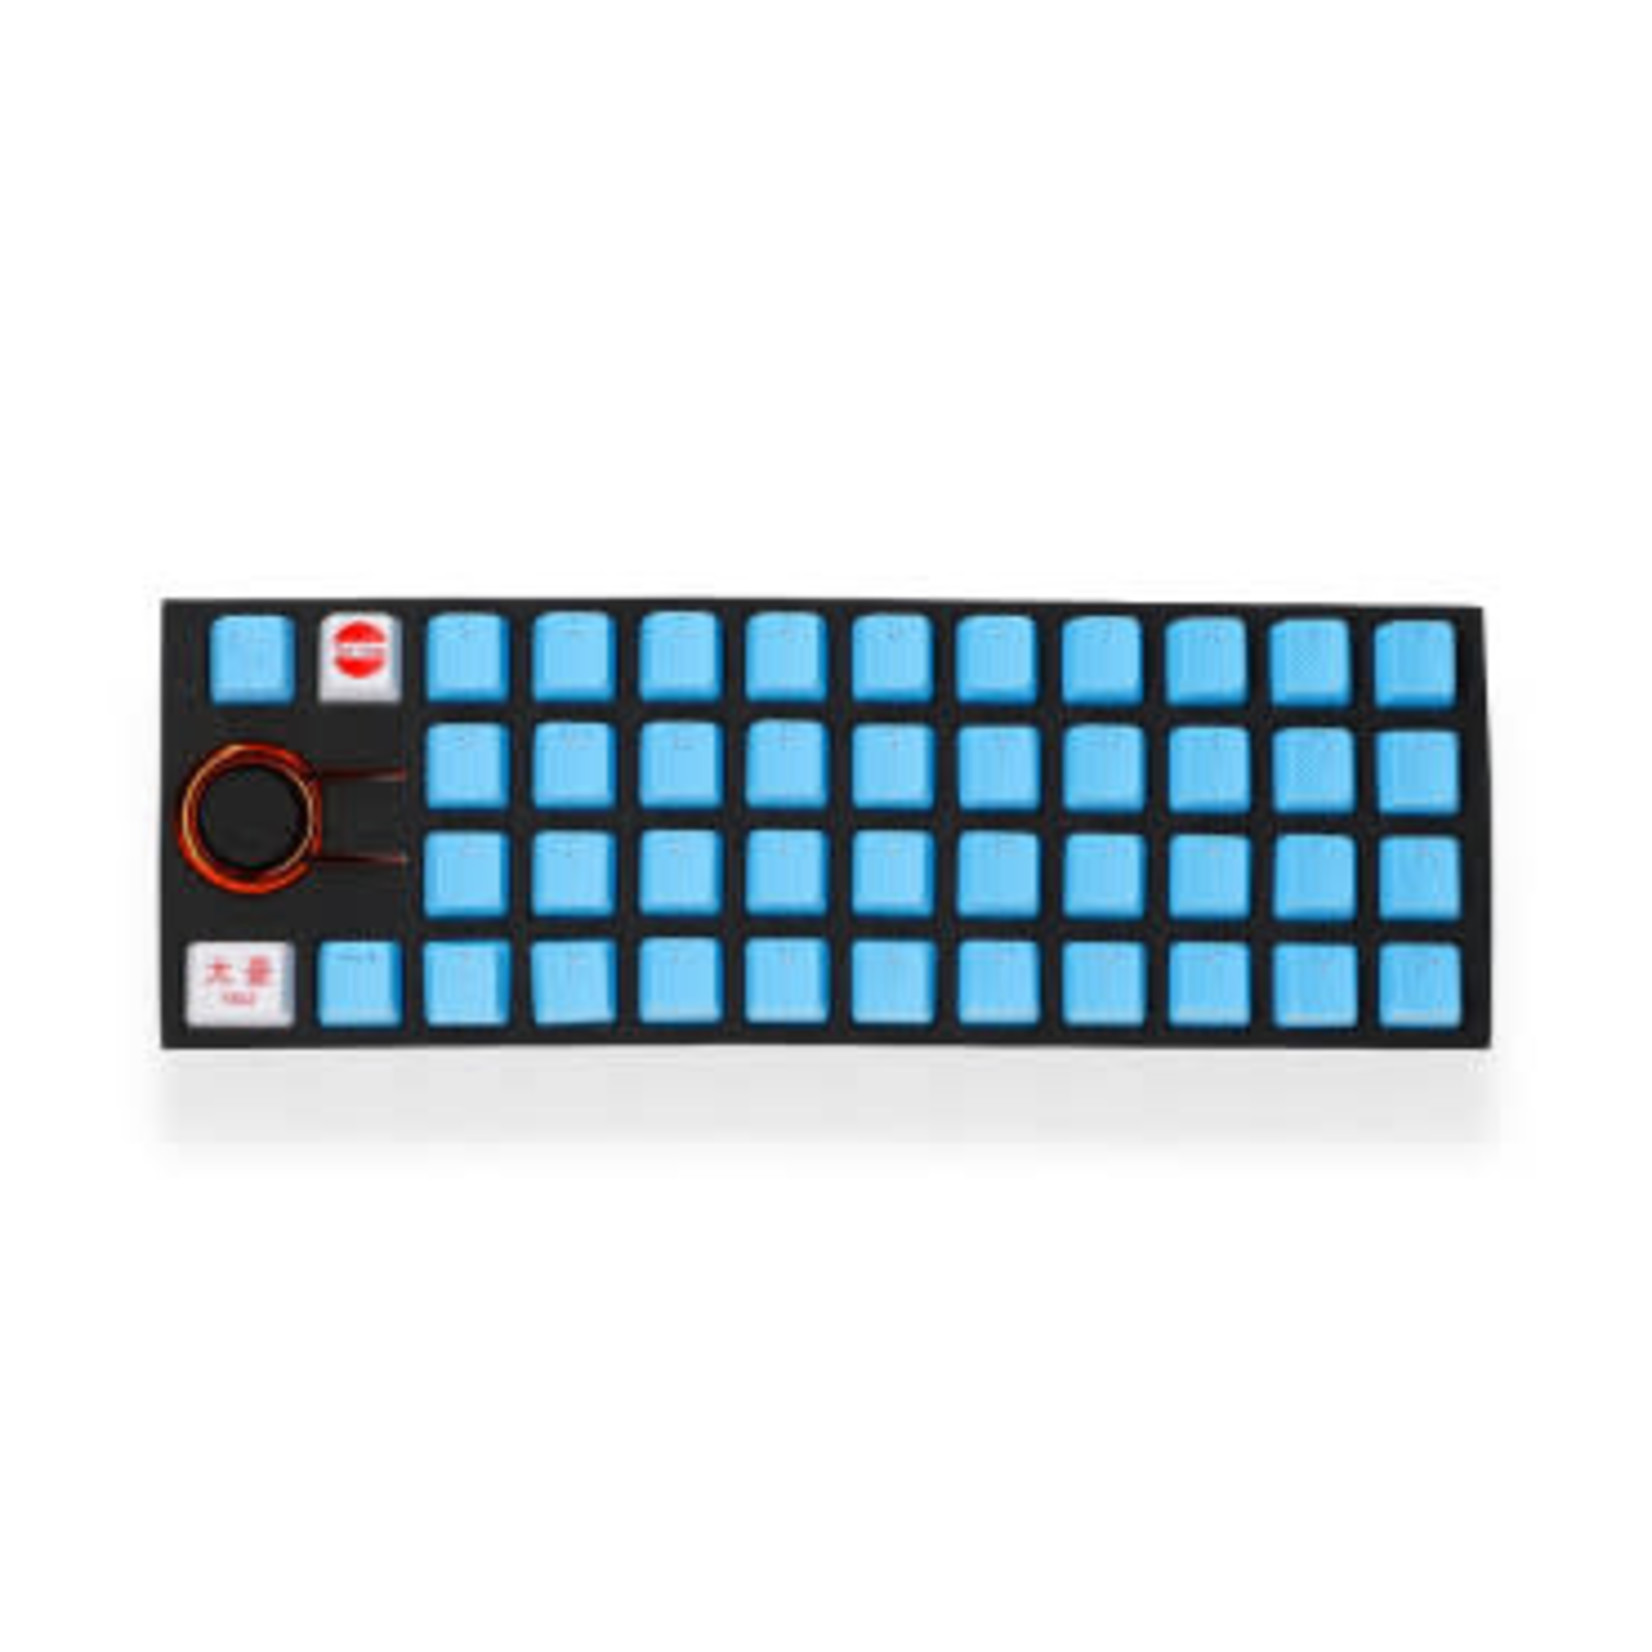 Tai-Hao Tai-Hao Rubber Keycaps Set Blue (42pc)